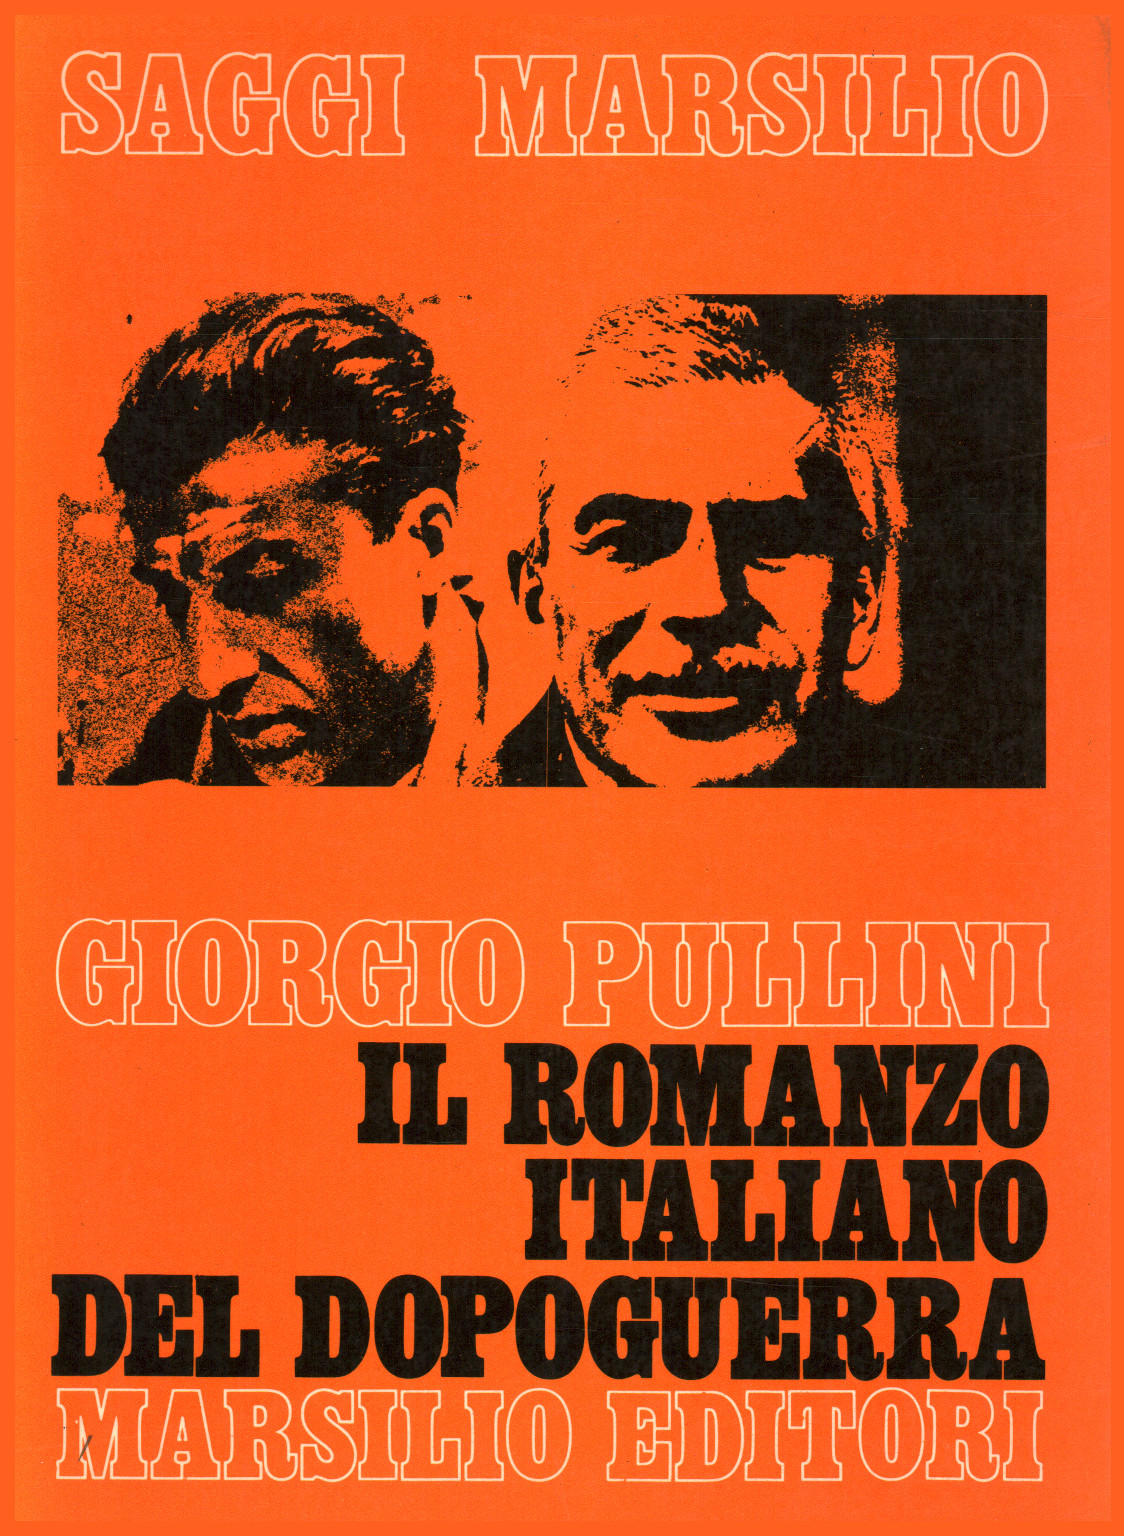 El italiano de la novela de la posguerra (1940-1960), s.una.